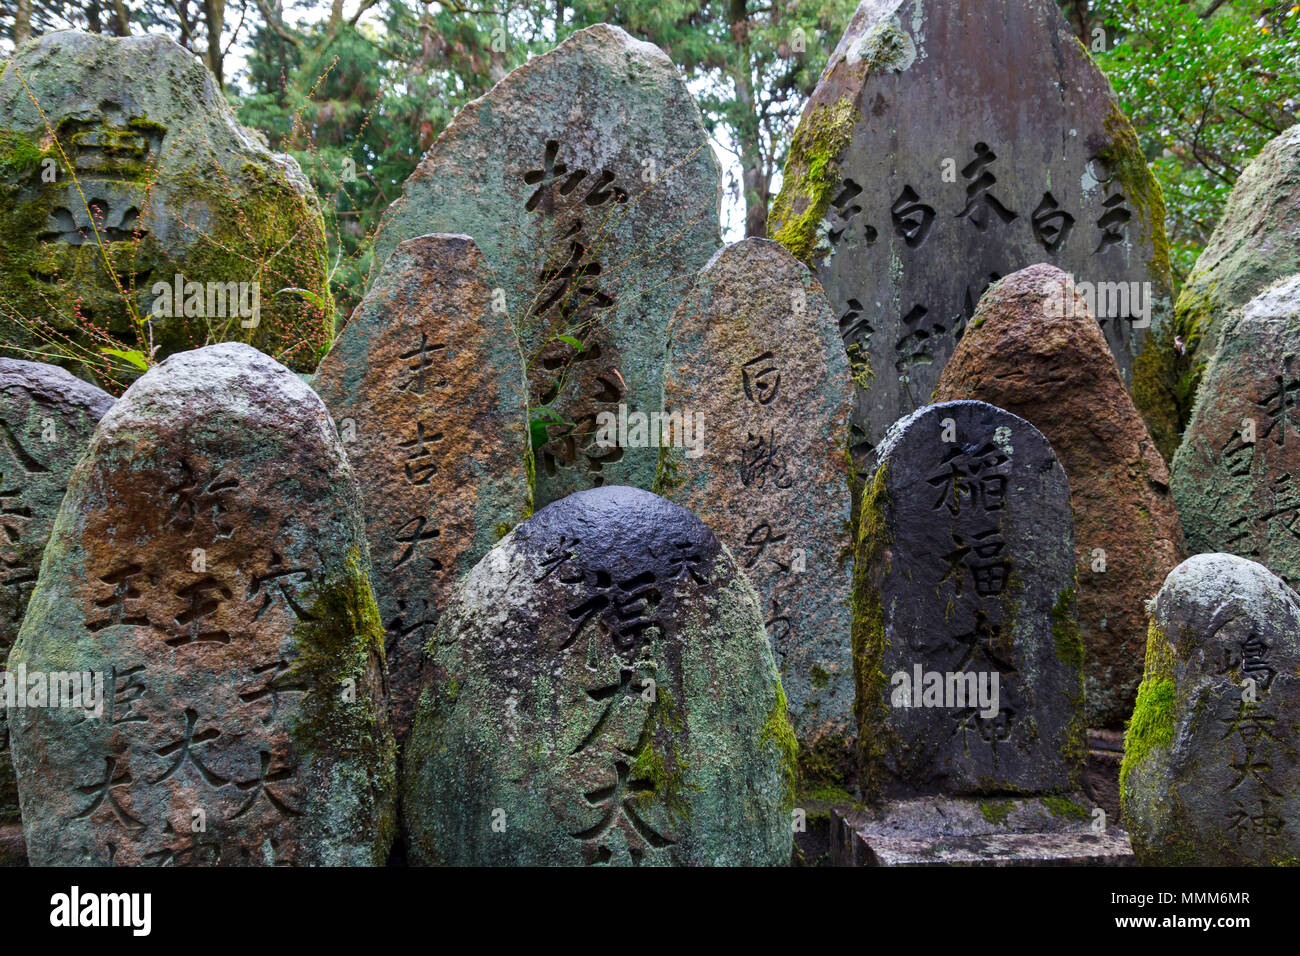 Japanese text 'kanji's' carved in stones in Kyoto, Japan Stock Photo